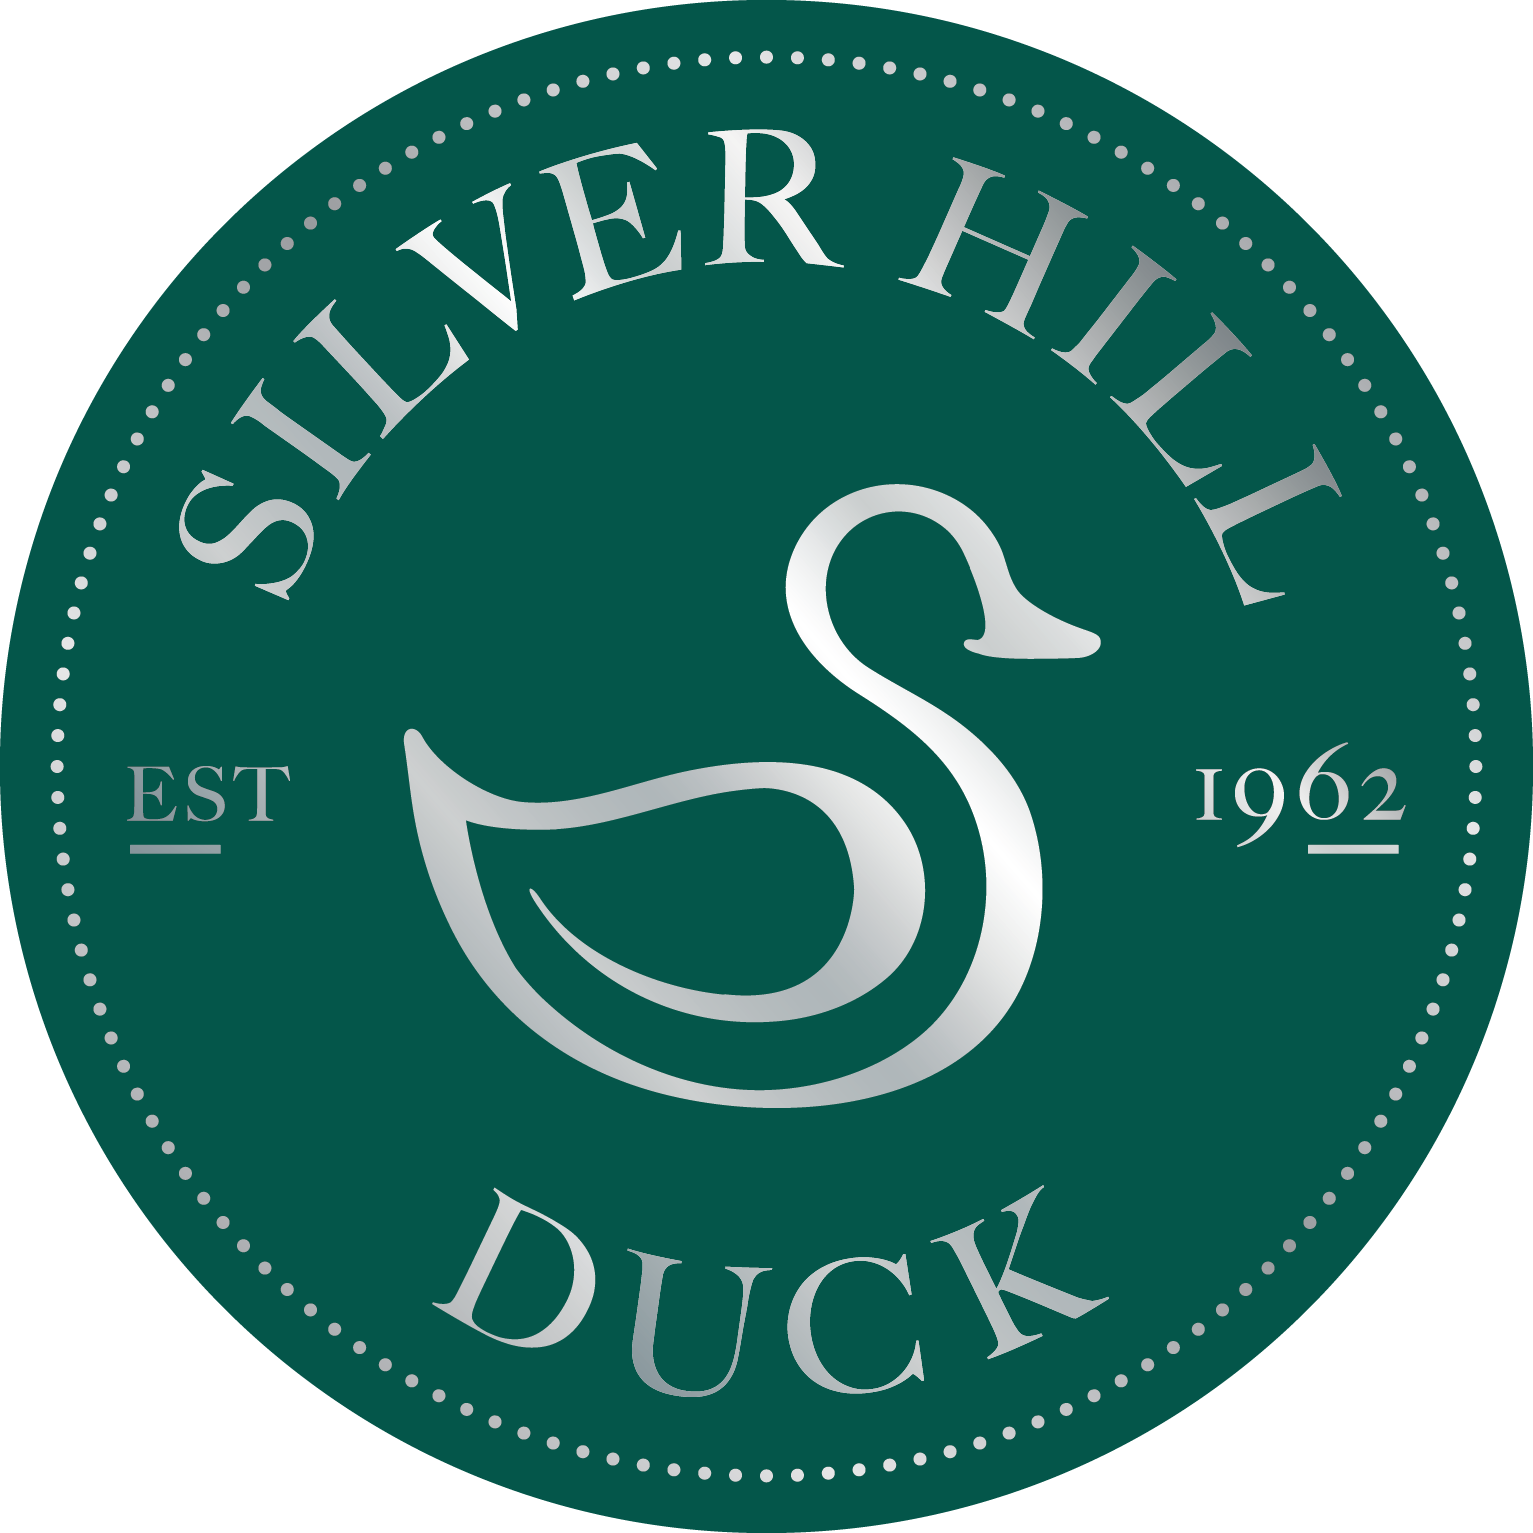 Silver Hill Duck